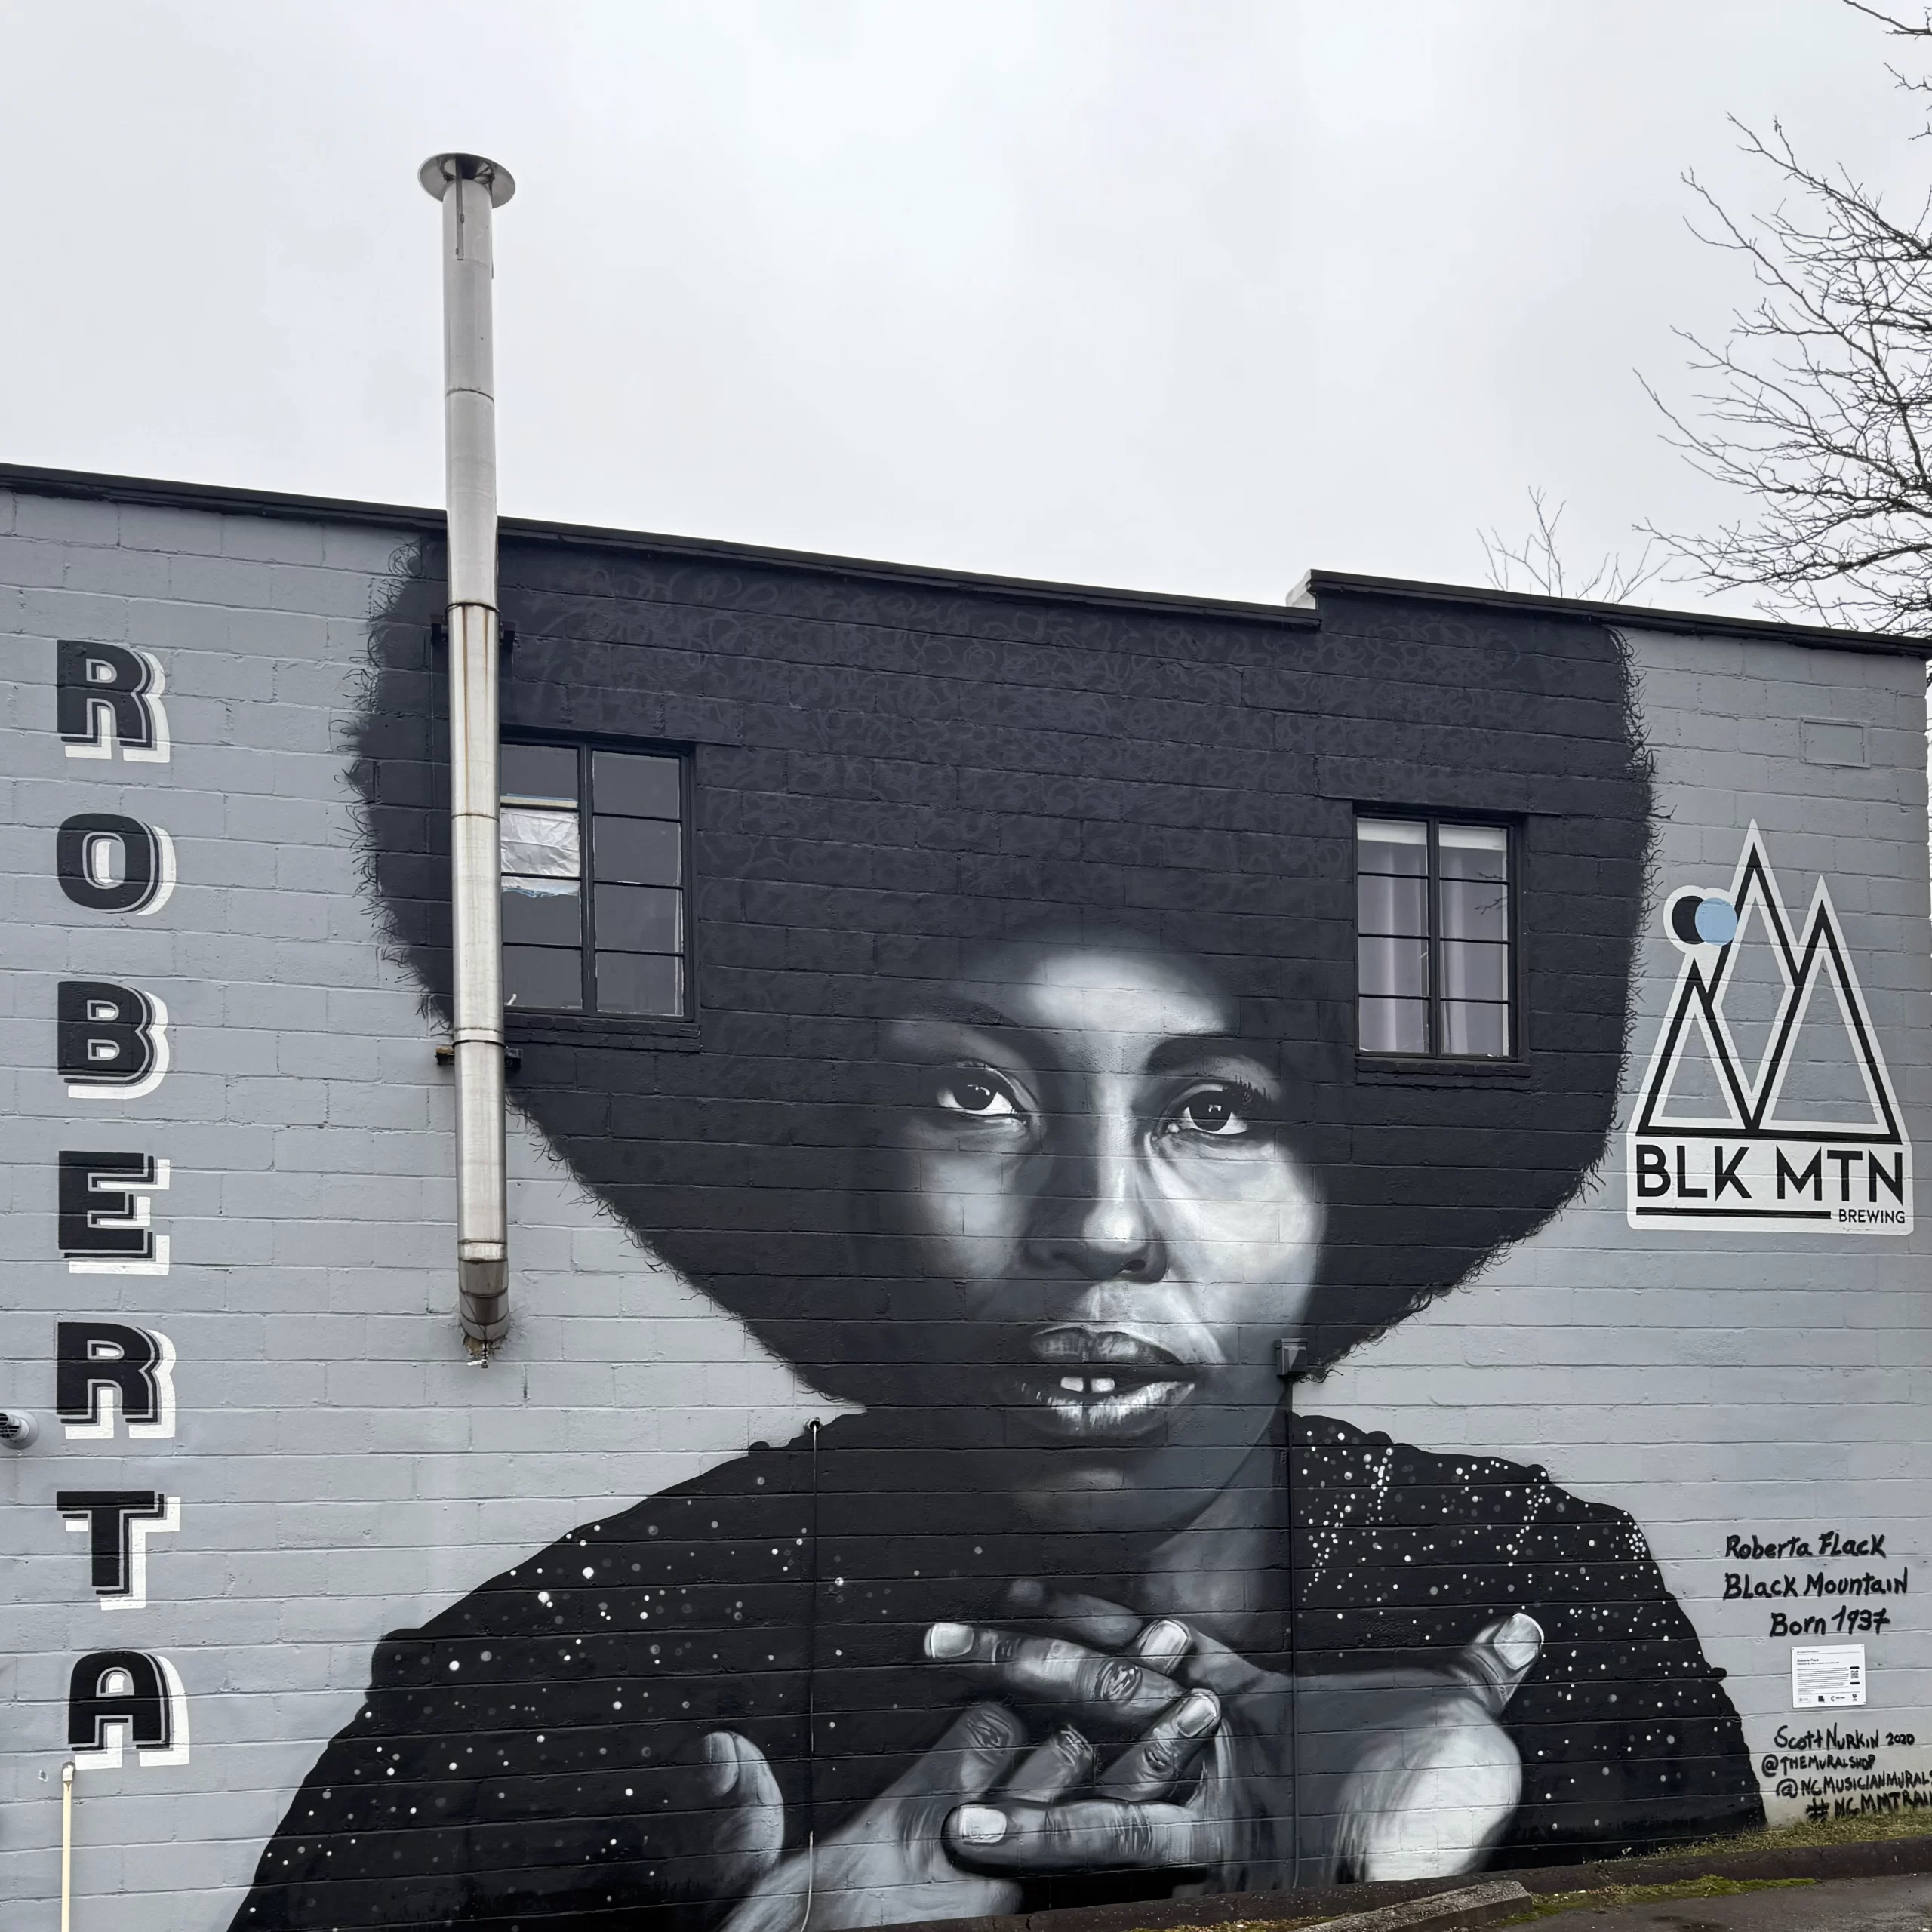 Roberta Flack mural at Black Mountain Brewing